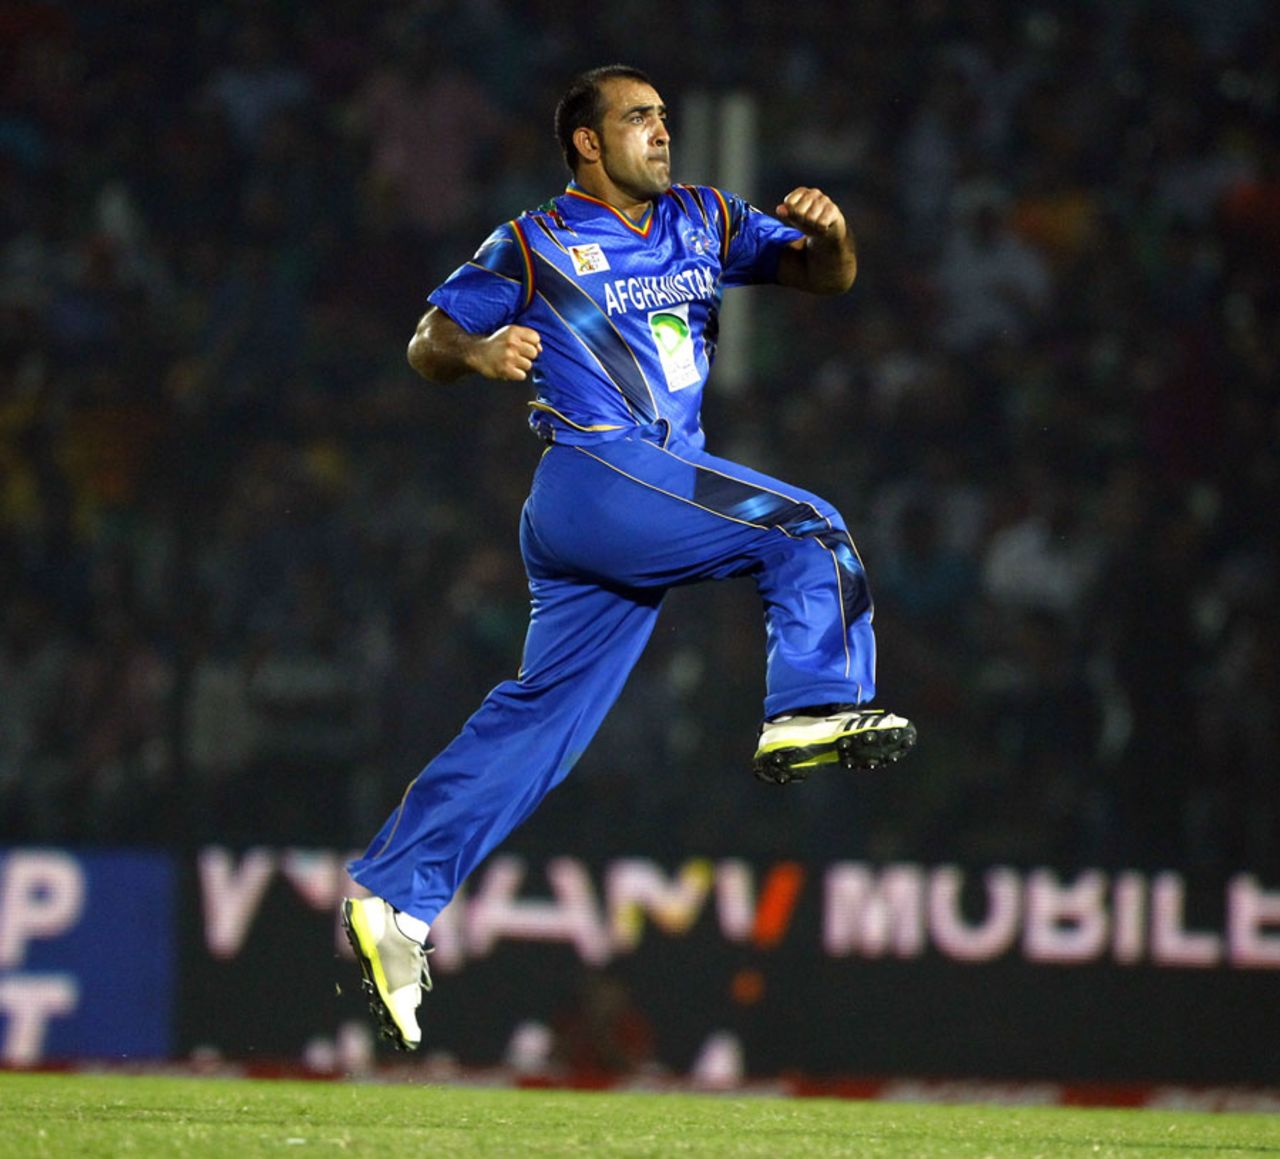 Samiullah Shenwari celebrates a wicket, Bangladesh v Afghanistan, Asia Cup, Fatullah, March 1, 2014